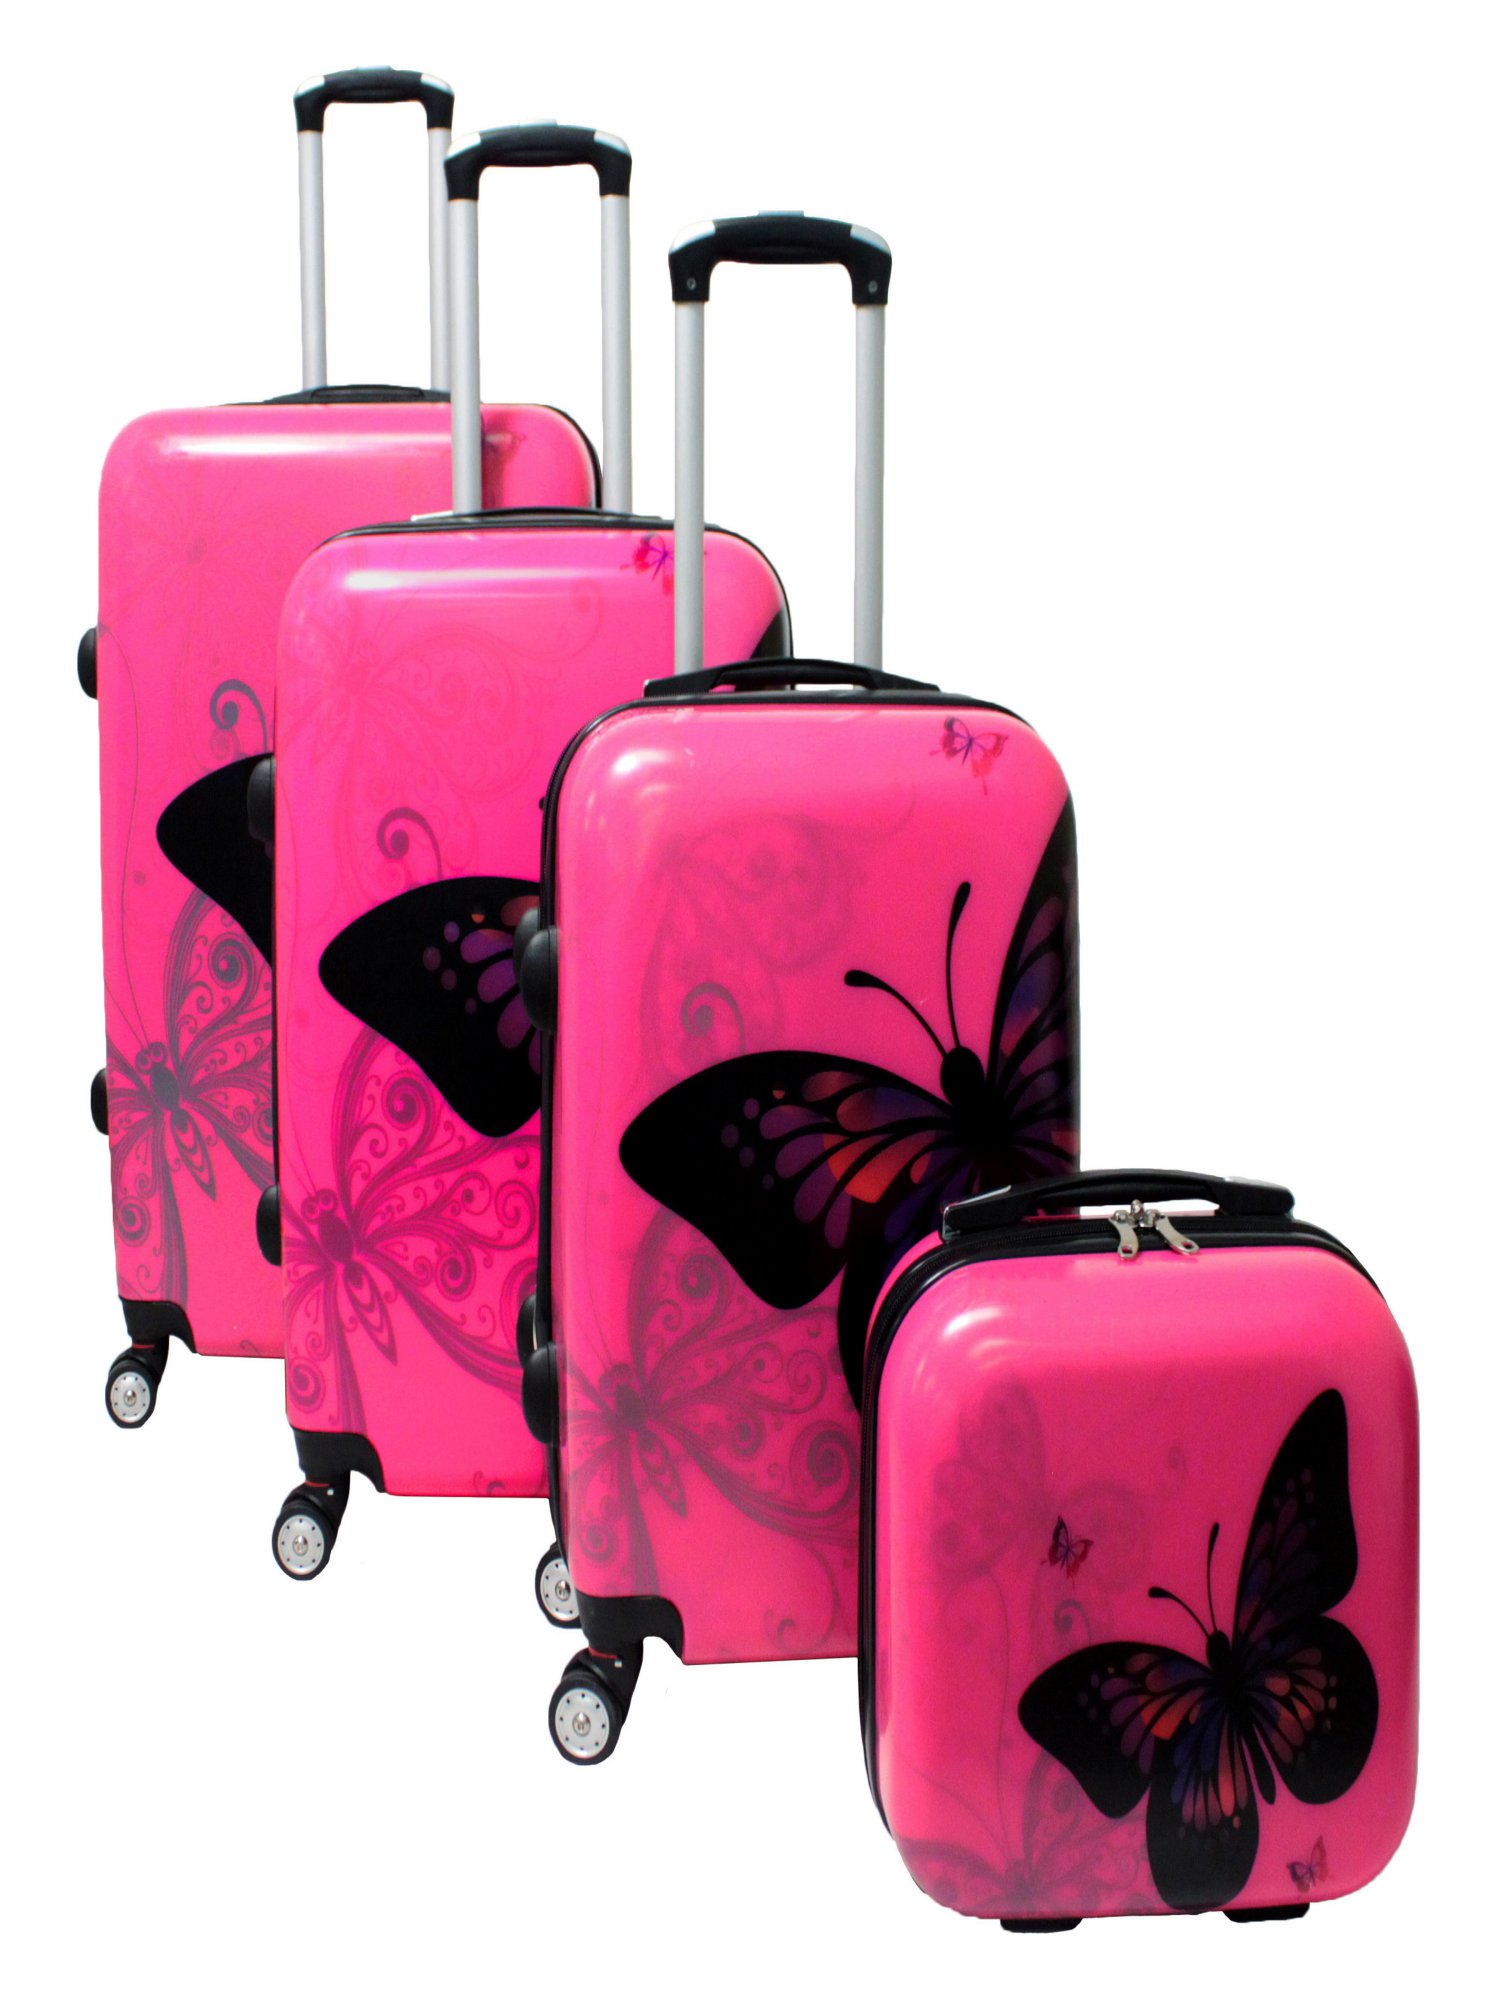 World Traveler 4-Piece Hardside Upright Spinner Luggage Set Butterfly